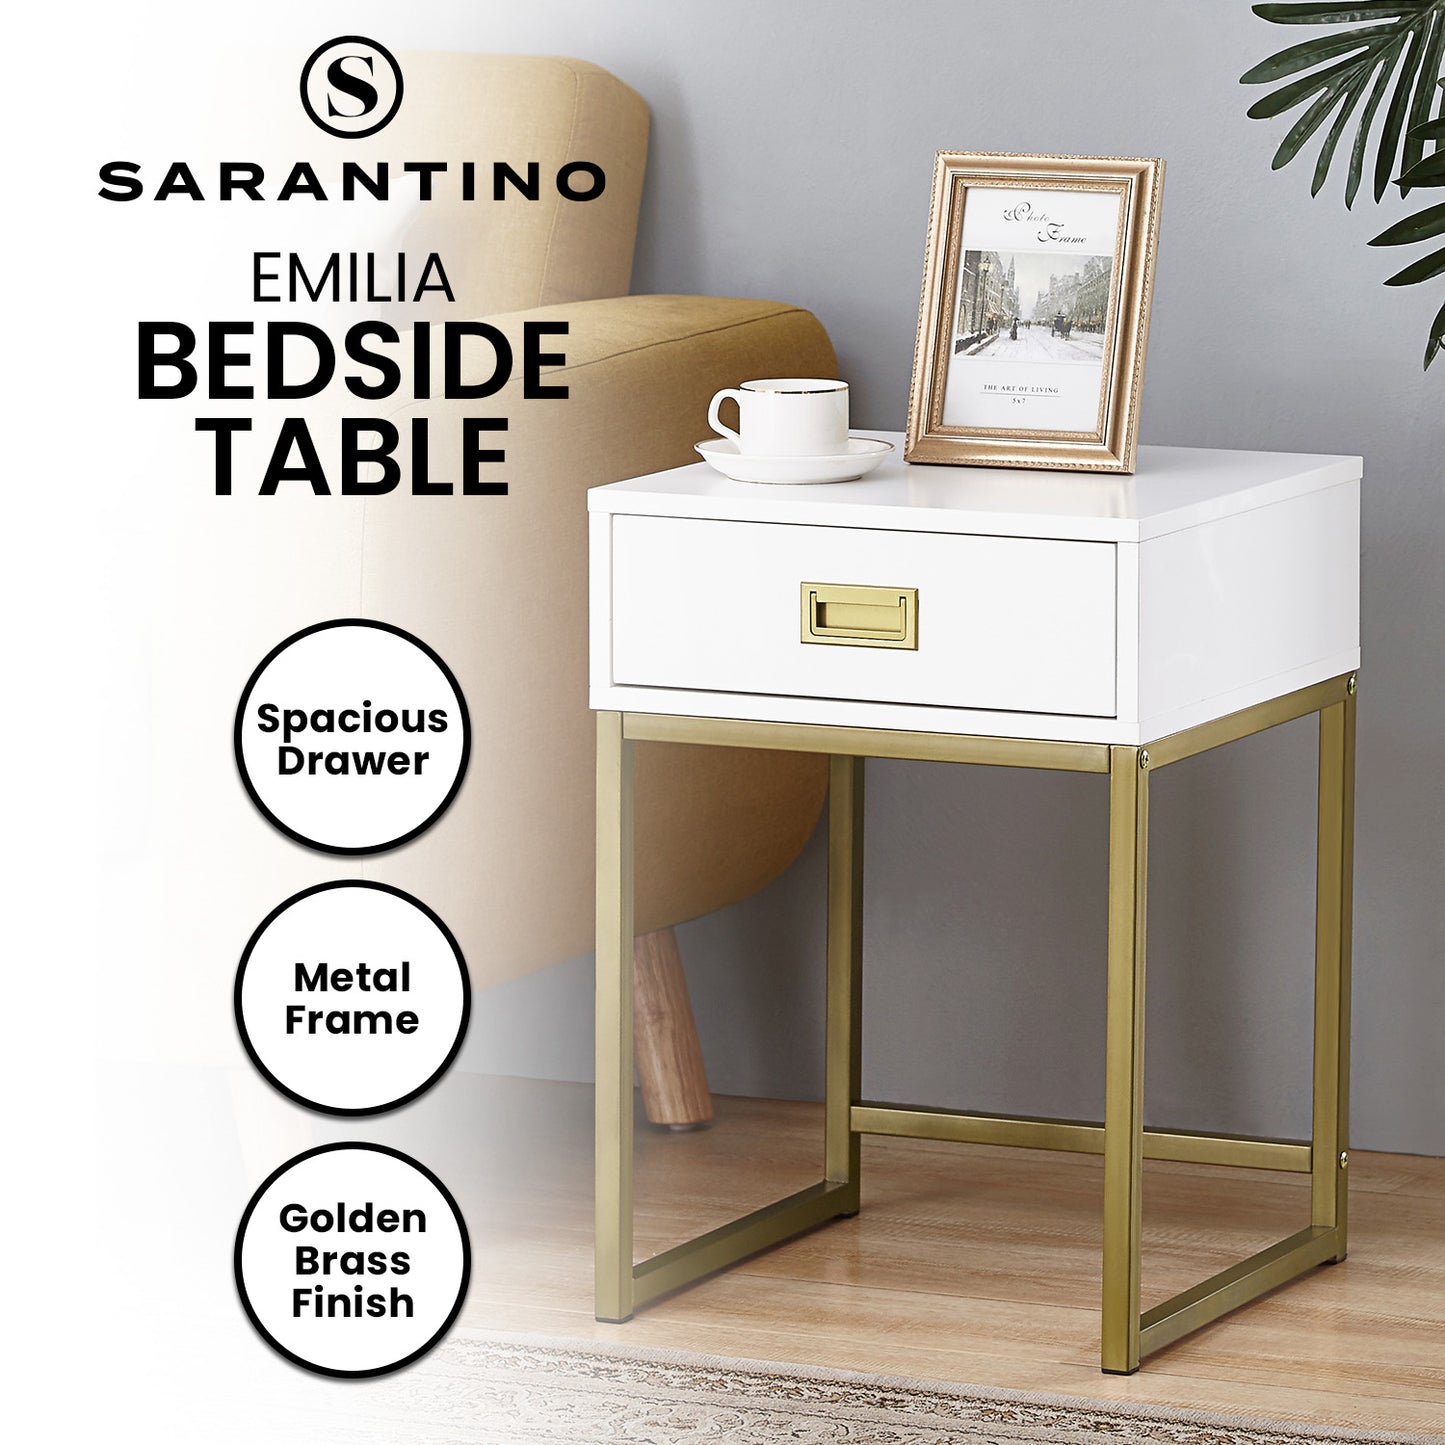 Sarantino Emilia Bedside Table Night Stand - White/Gold